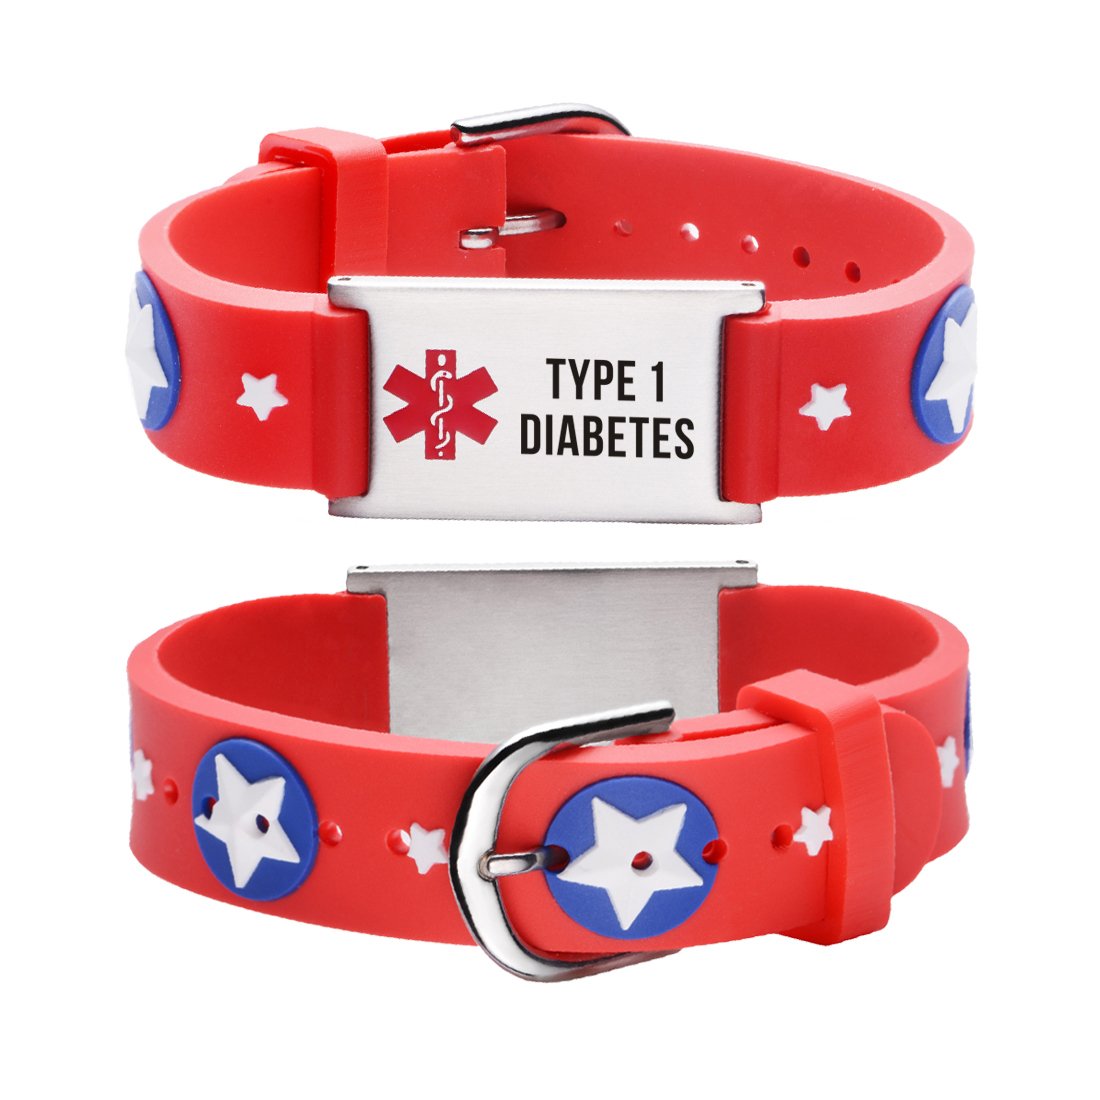 Type 1 Diabetes bracelets for kids-Red american star